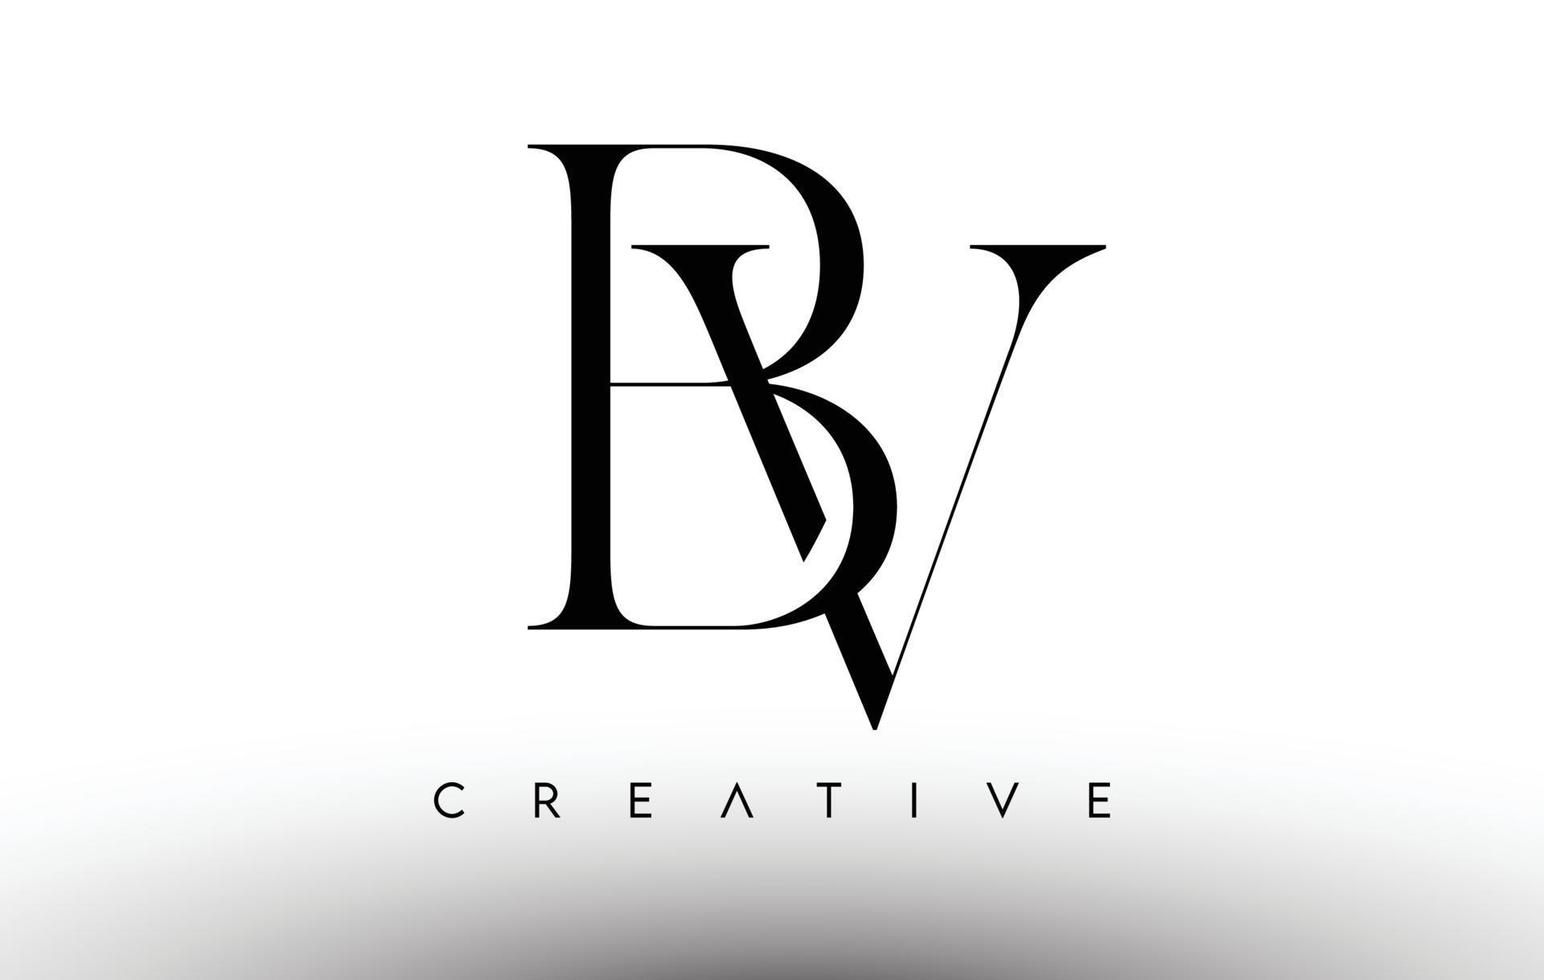 BV Minimalist Serif Modern Letter Logo in Black and White. BV Creative ...